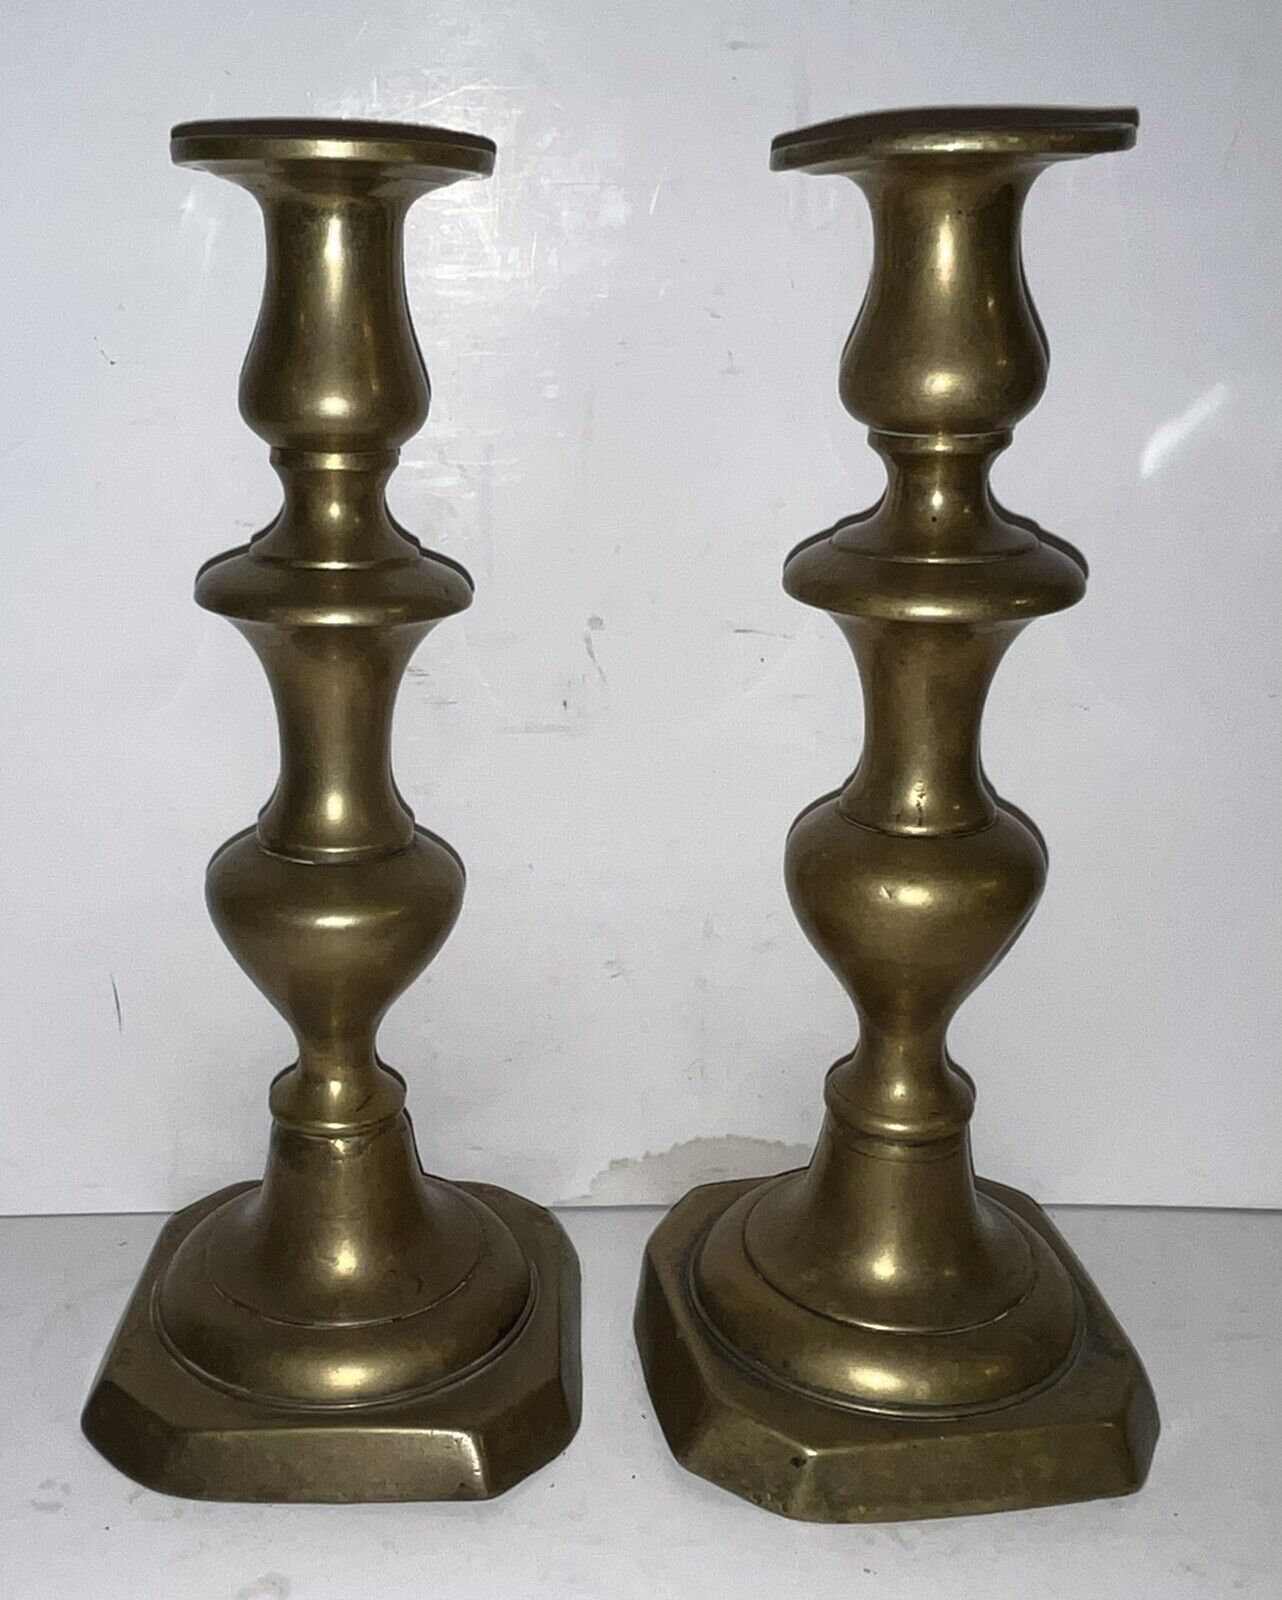 HUGE Antique 1850 Pair Queen Anne Spun Brass Push-up Candle Sticks